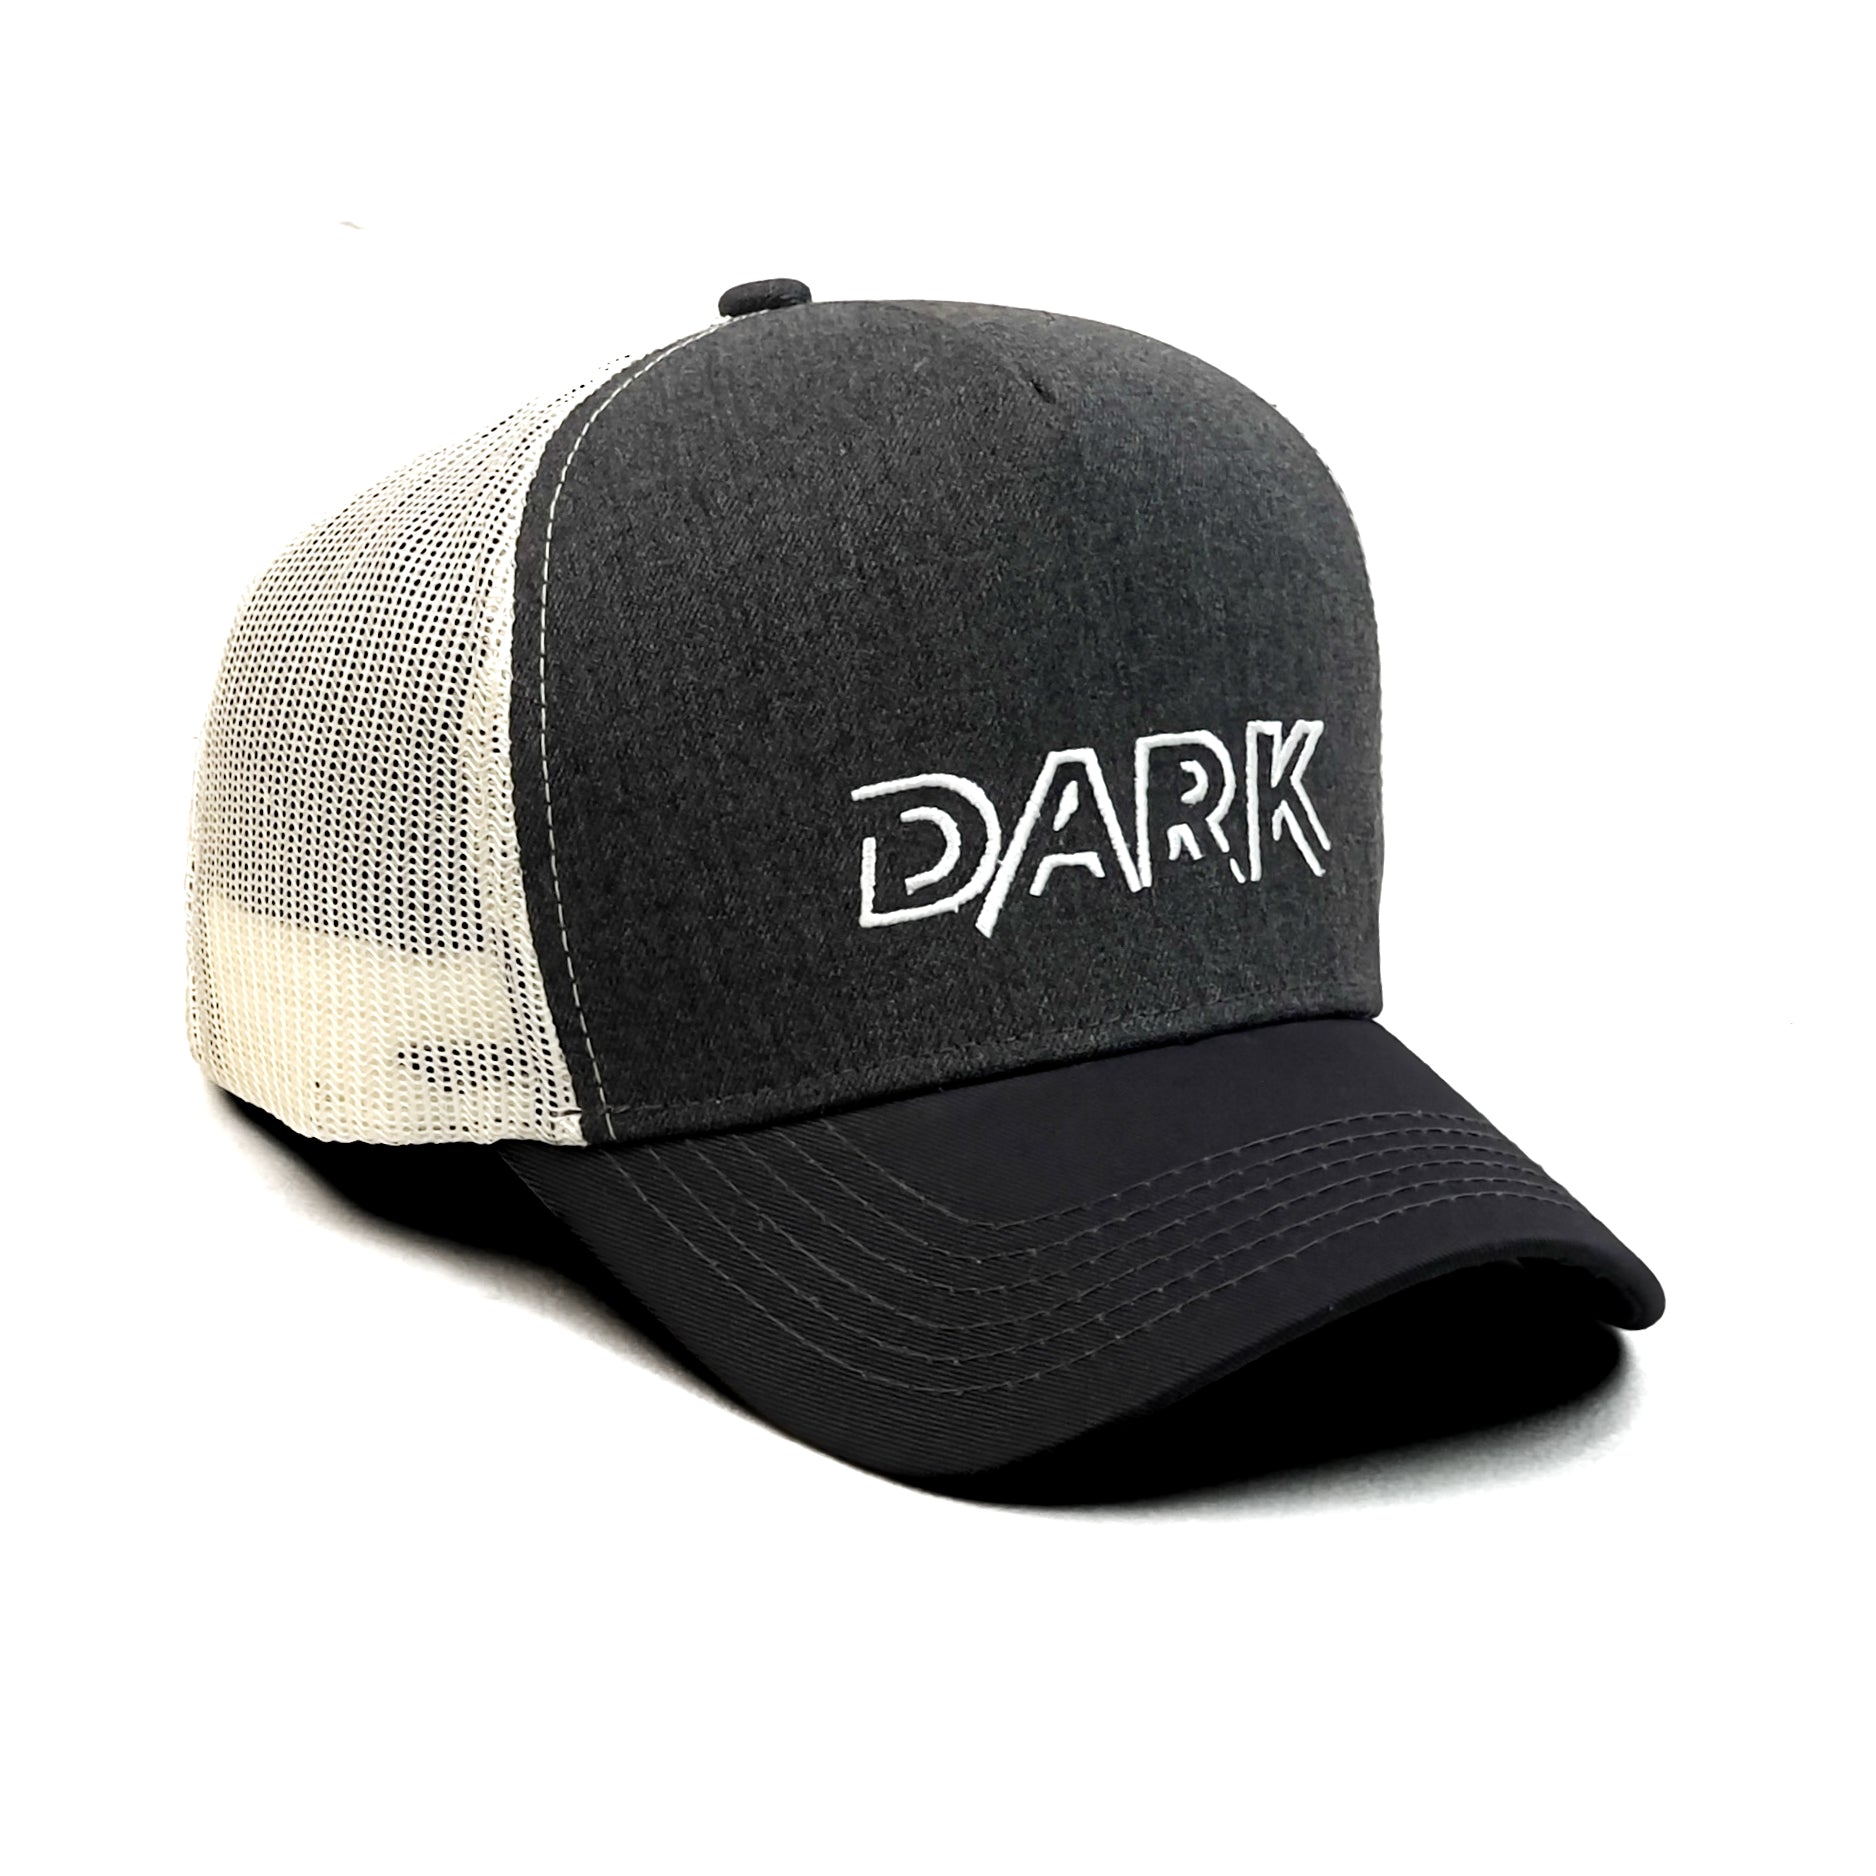 HEAD GEAR DARK TRUCKER CAP